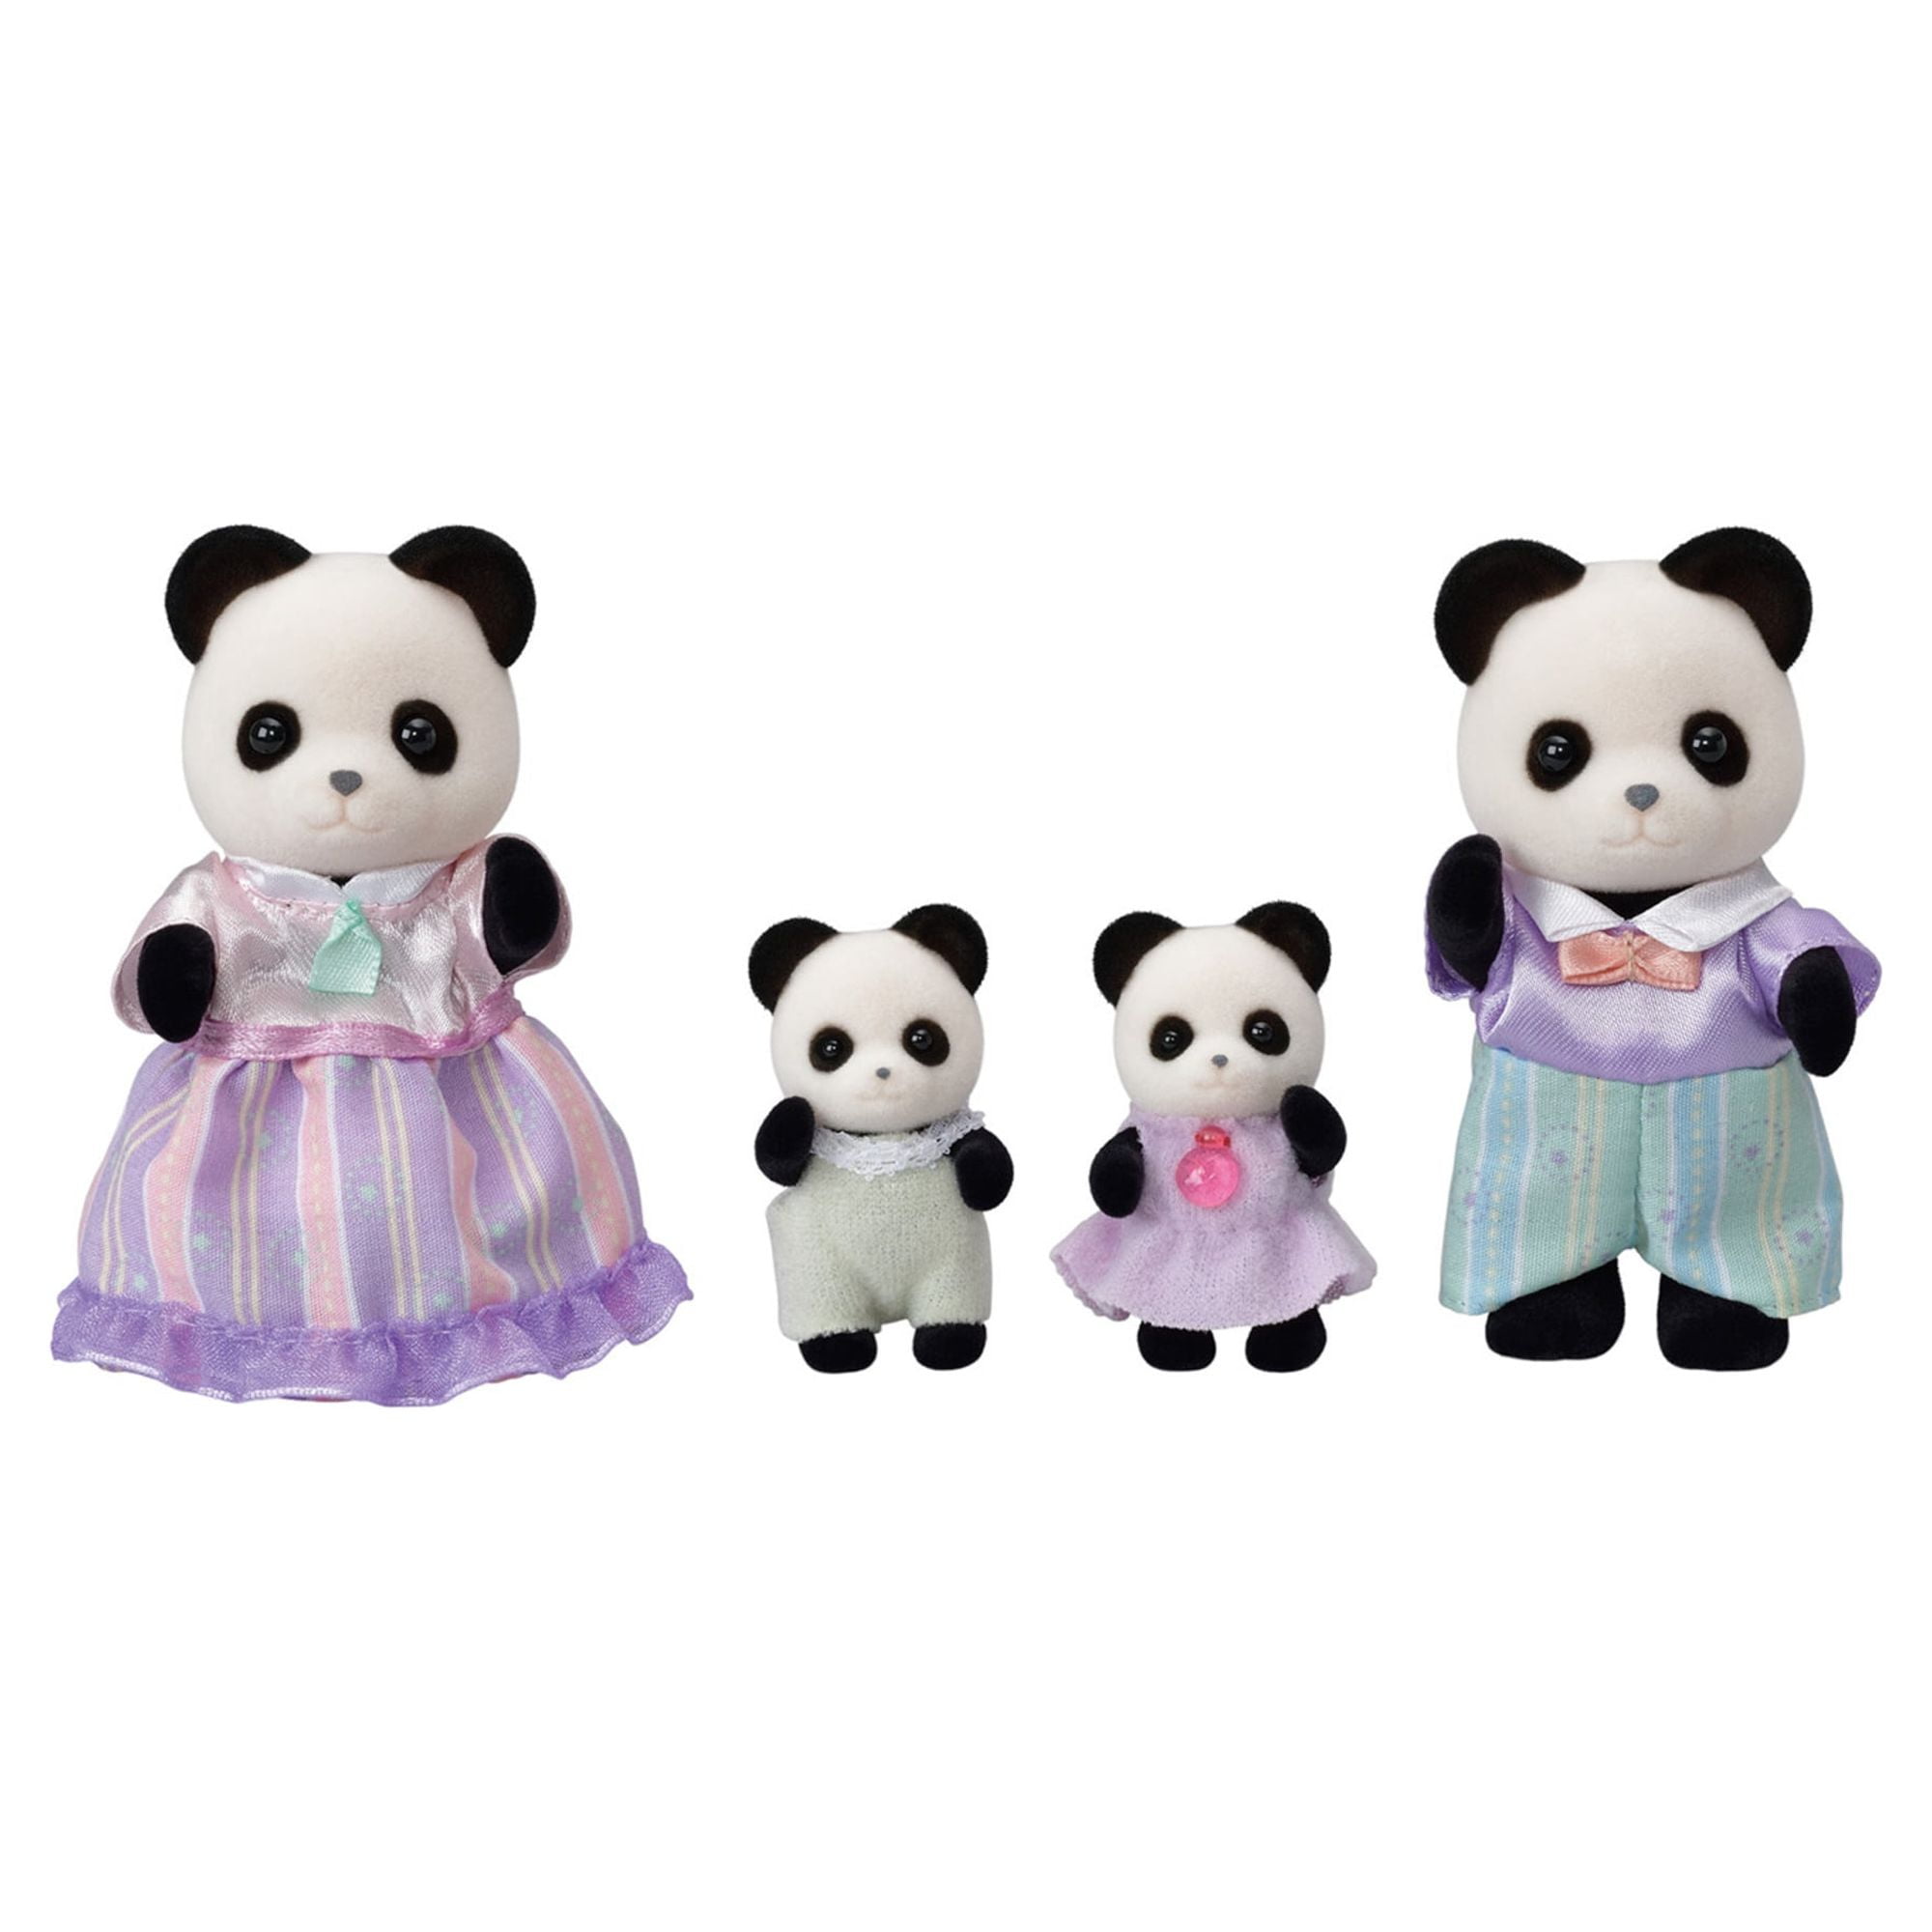 Figurines Klorofil Family Panda Toy